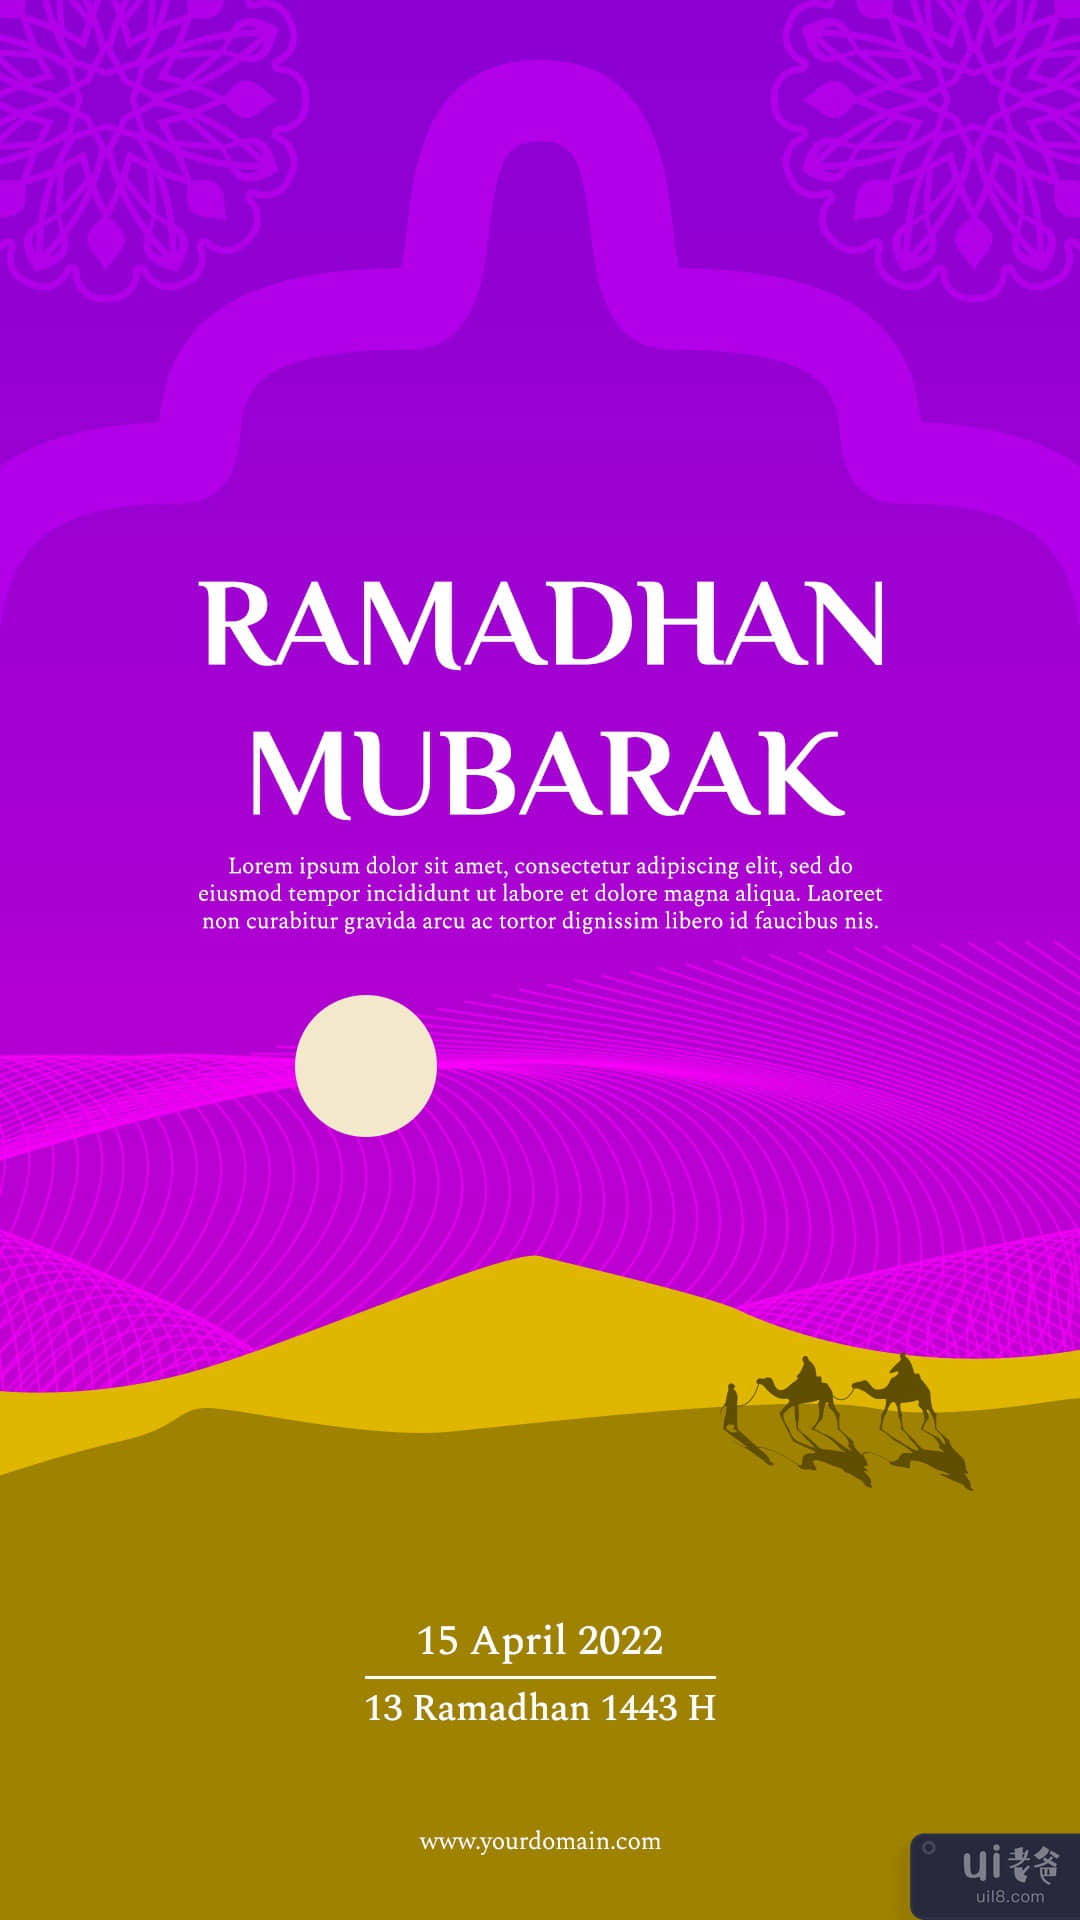 斋月穆巴拉克 Instagram 故事(Ramadhan Mubarak Instagram Stories)插图8